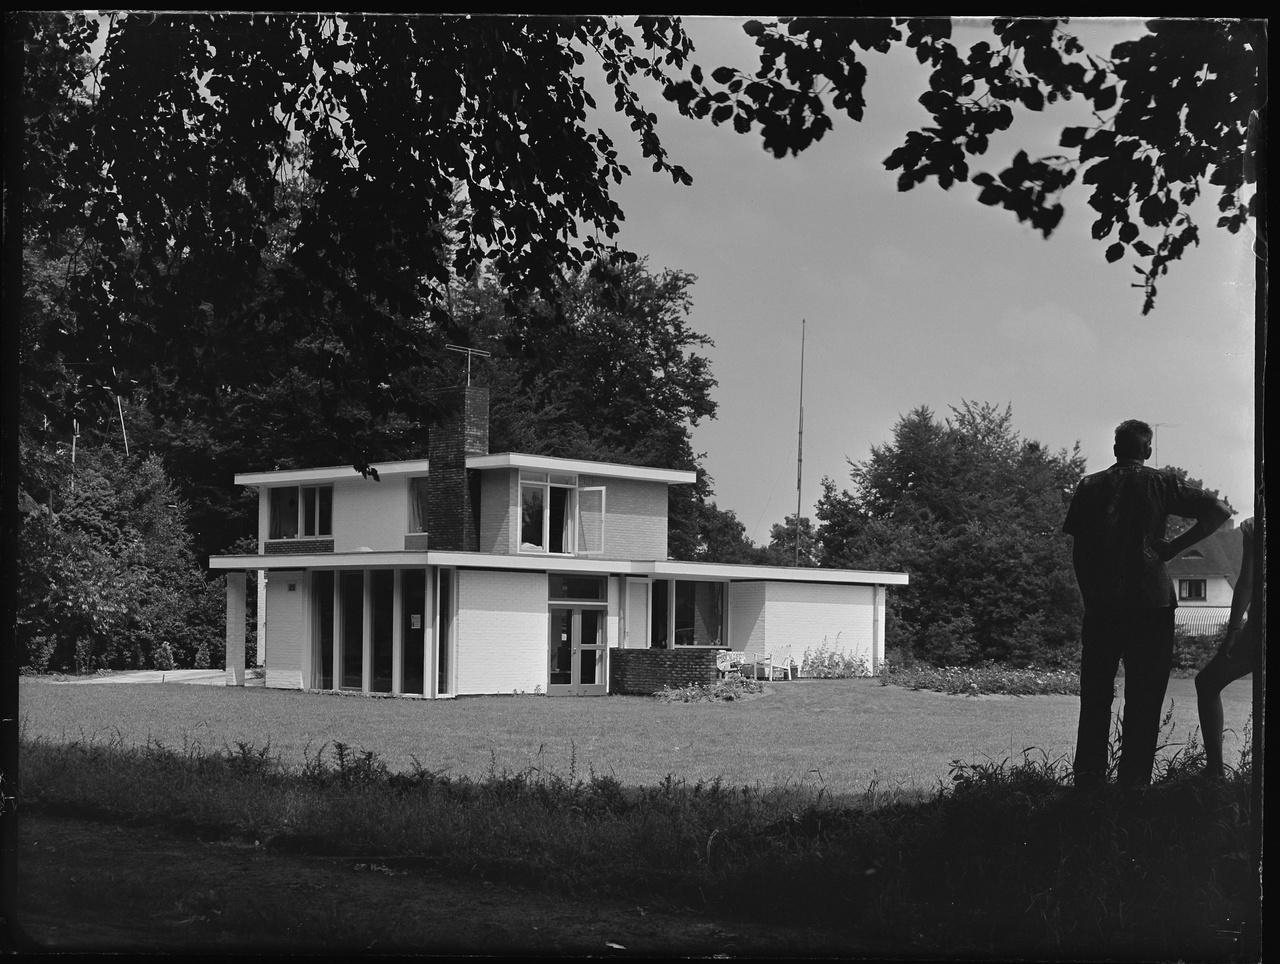 10/10 - Huis voor Binnert Schröder in Hattem, westzijde, 1954, architect Han Schröder. Foto Jan Versnel, copyright Maria Austria Instituut, Amsterdam